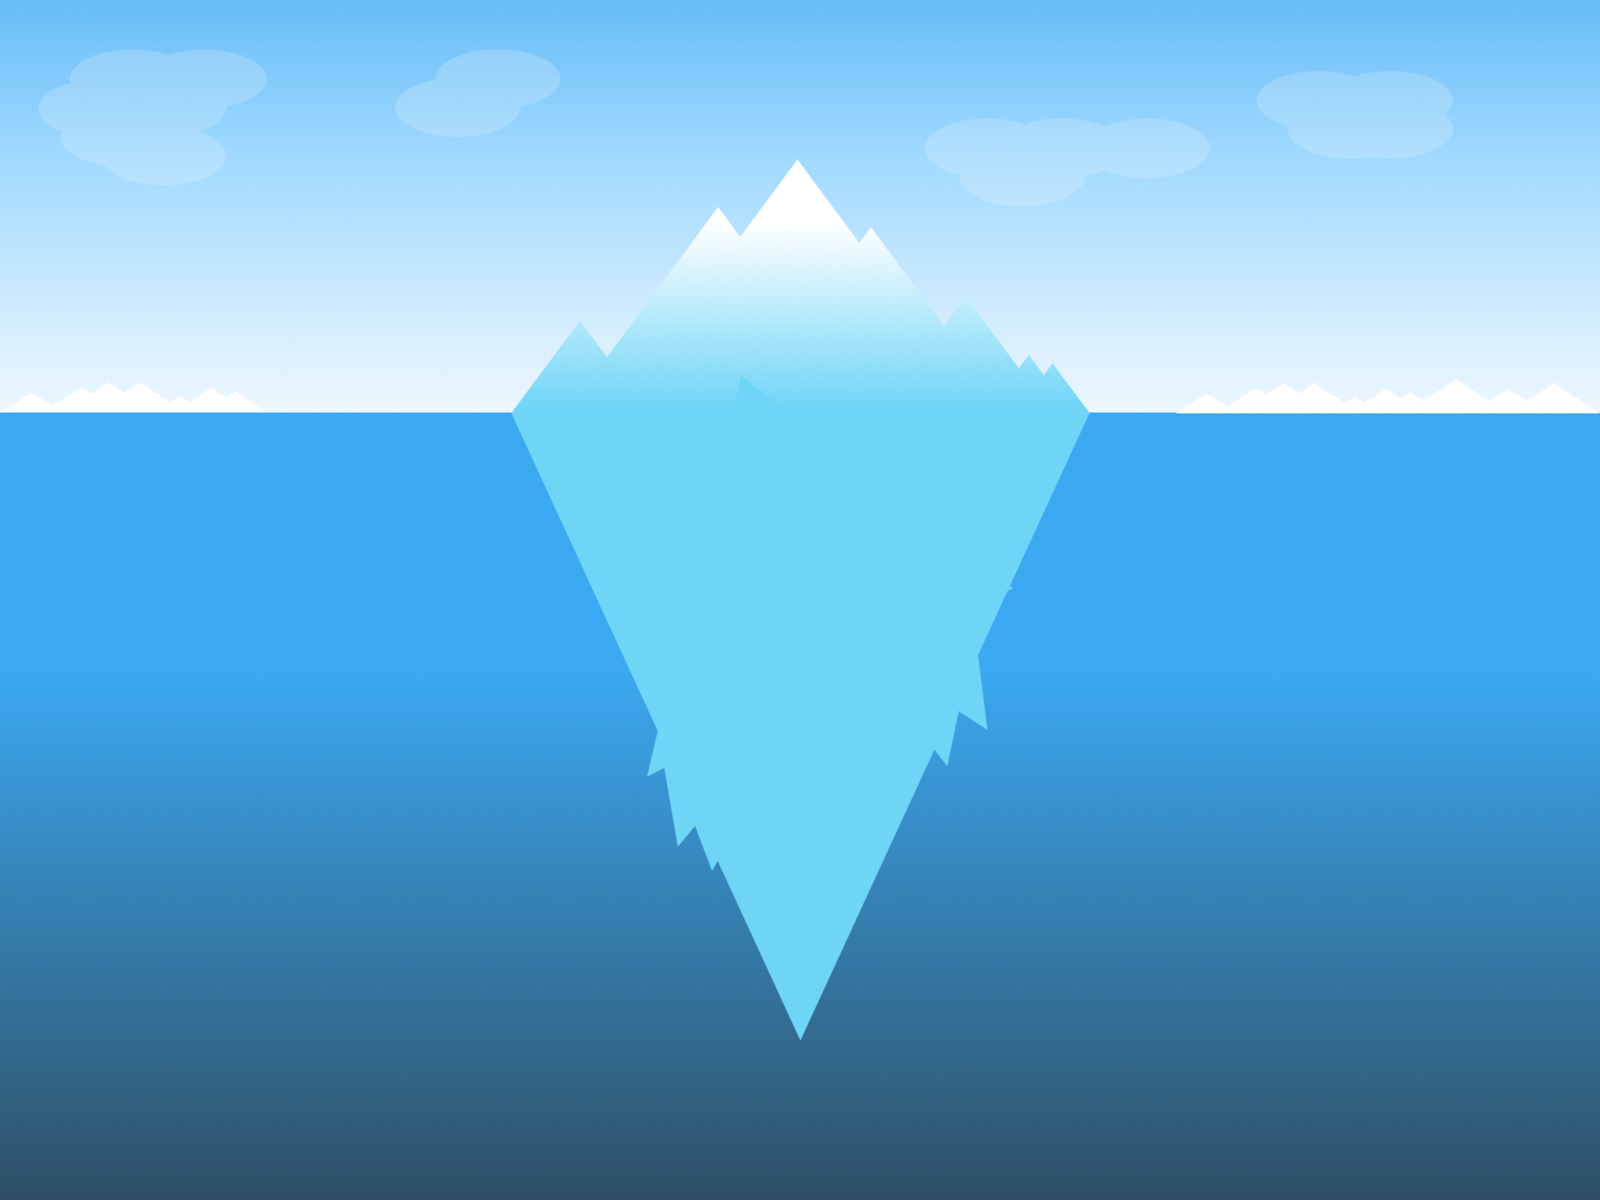 Iceberg Canvas by Justin Matsnev on Dribbble